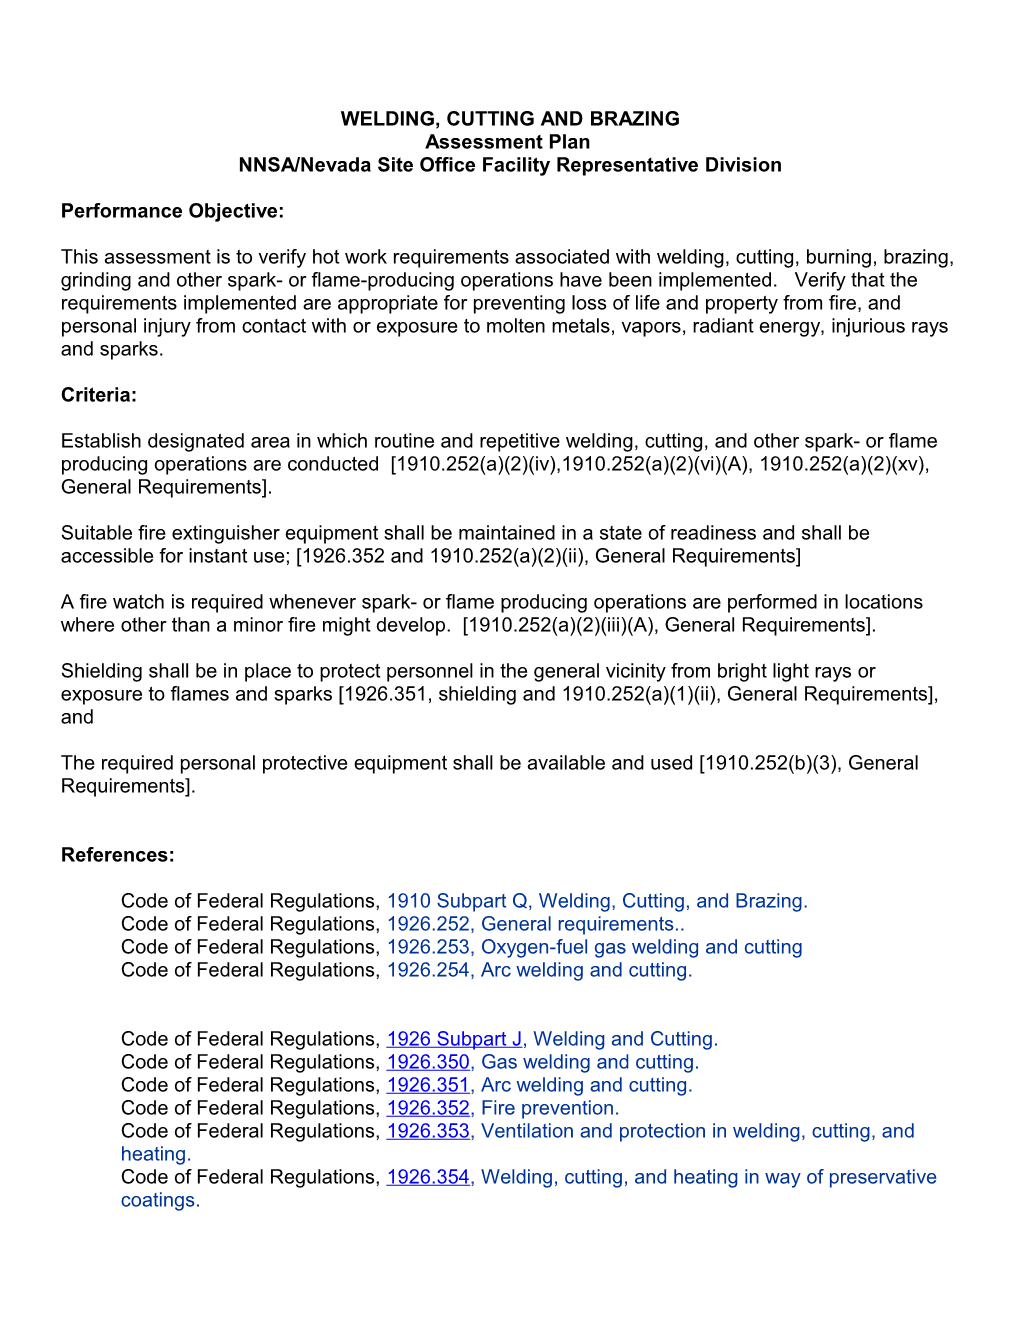 Welding Cutting and Brazing Assessment Plan Assessment Plan - Developed by NNSA/Nevada